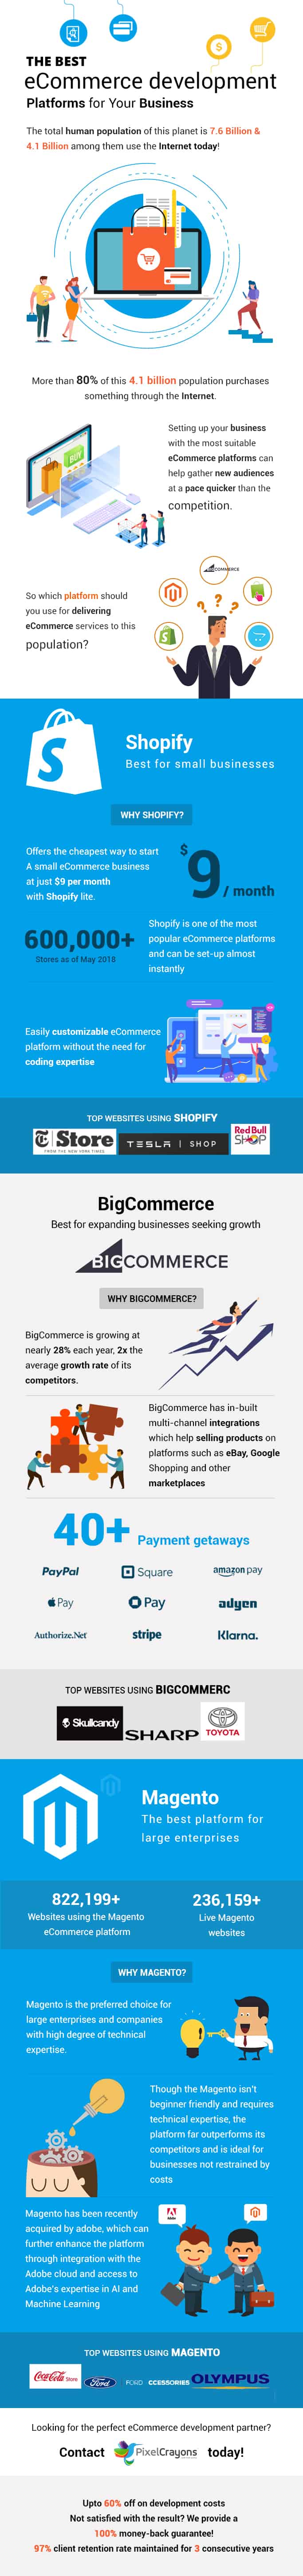 best ecommerce platforms, top ecommerce platforms